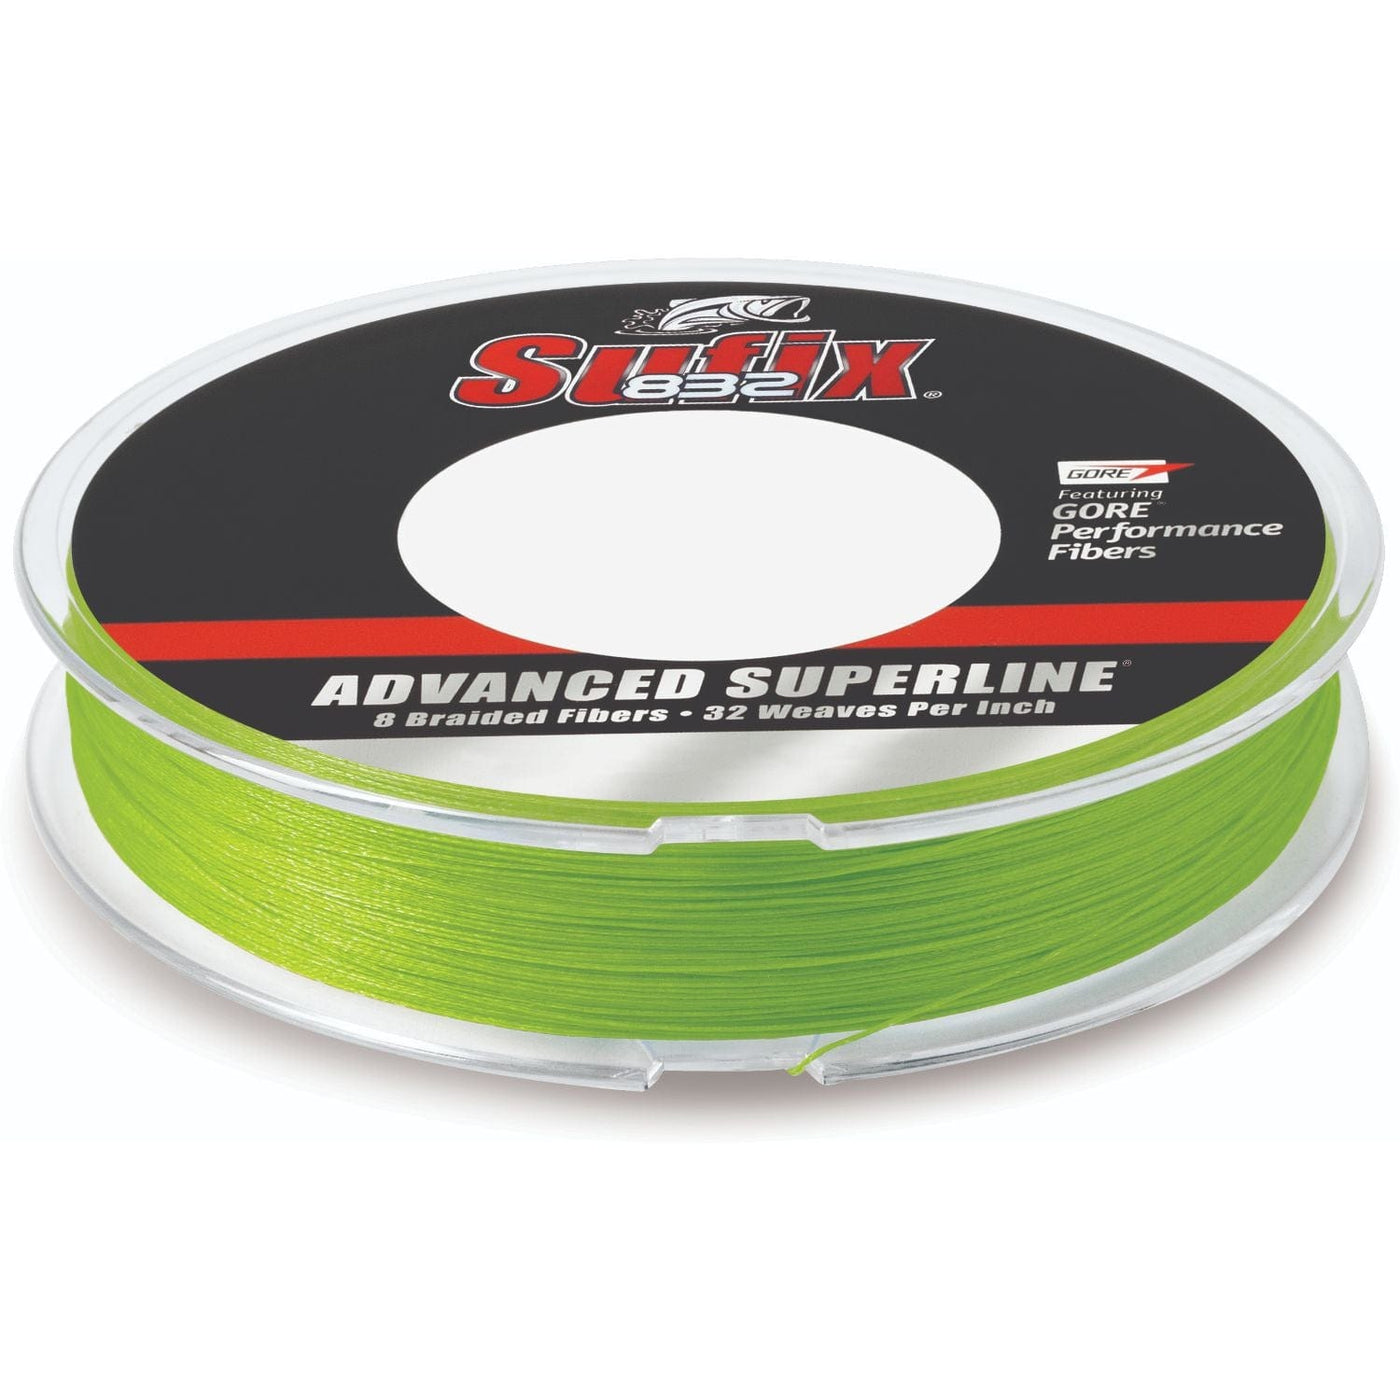 Sufix Sufix Advanced Superline 832 Braid lb 300 300 yards / 30 lb / Neon Lime Fishing